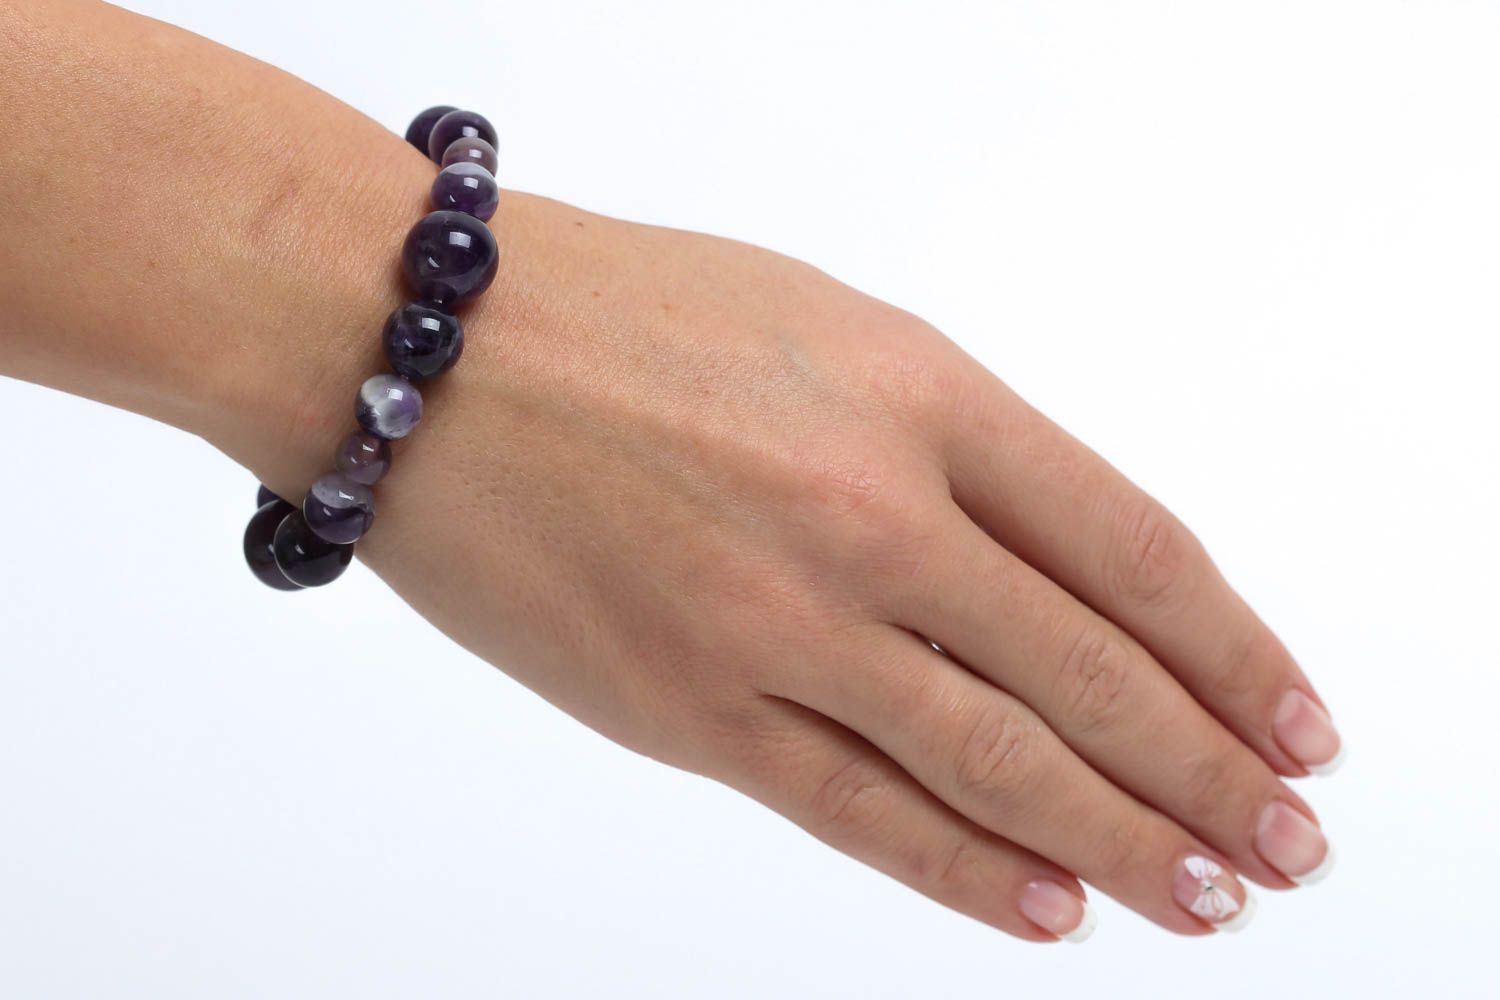 Handmade bracelet bead bracelet gemstone jewelry fashion accessories gift ideas photo 5